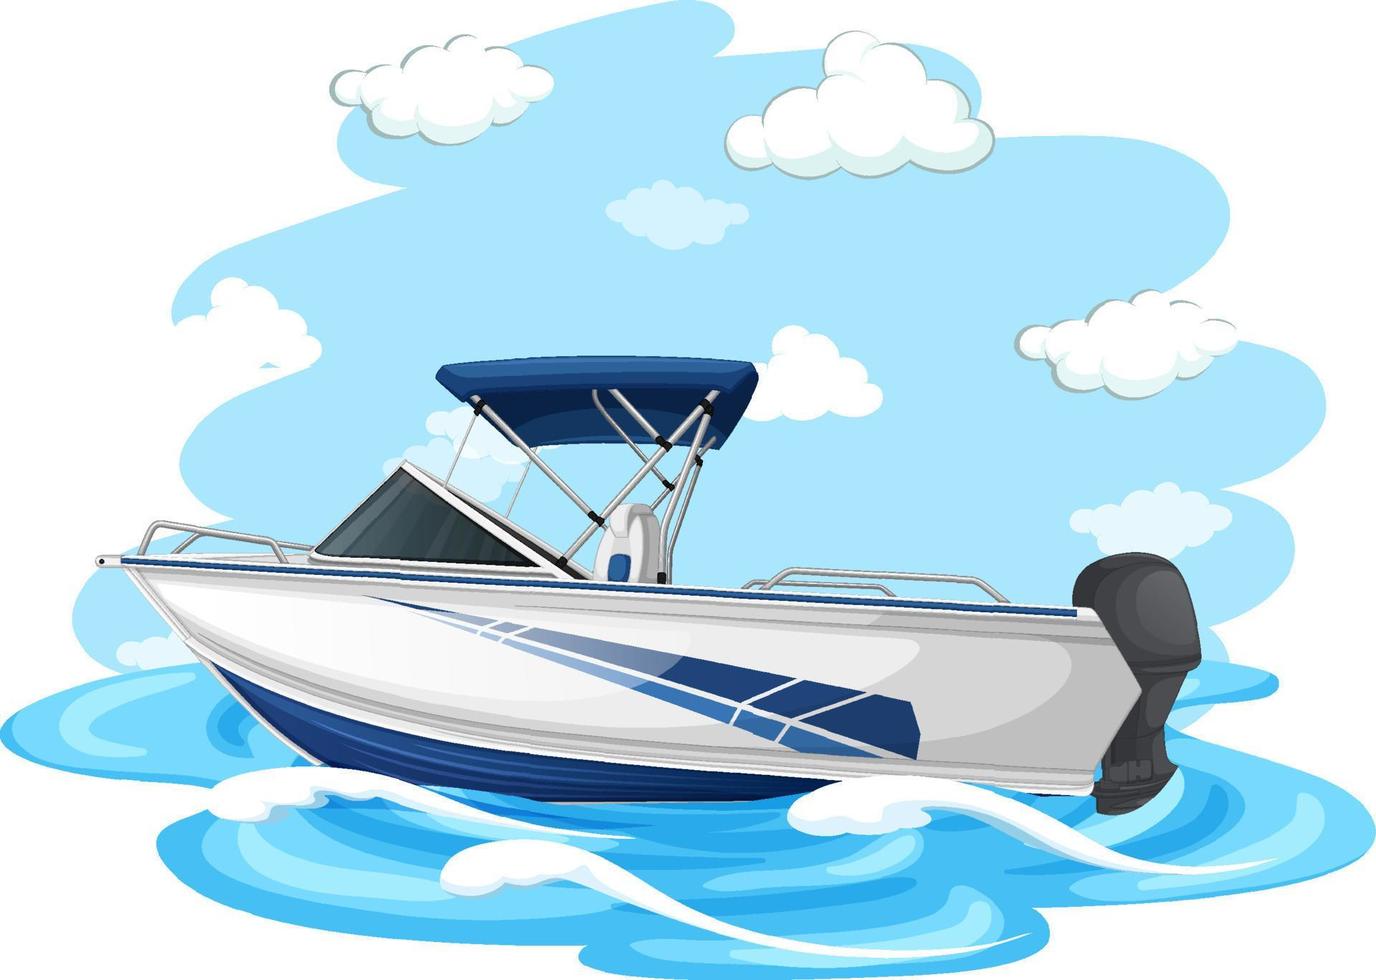 Speedboat in cartoon style on white background vector